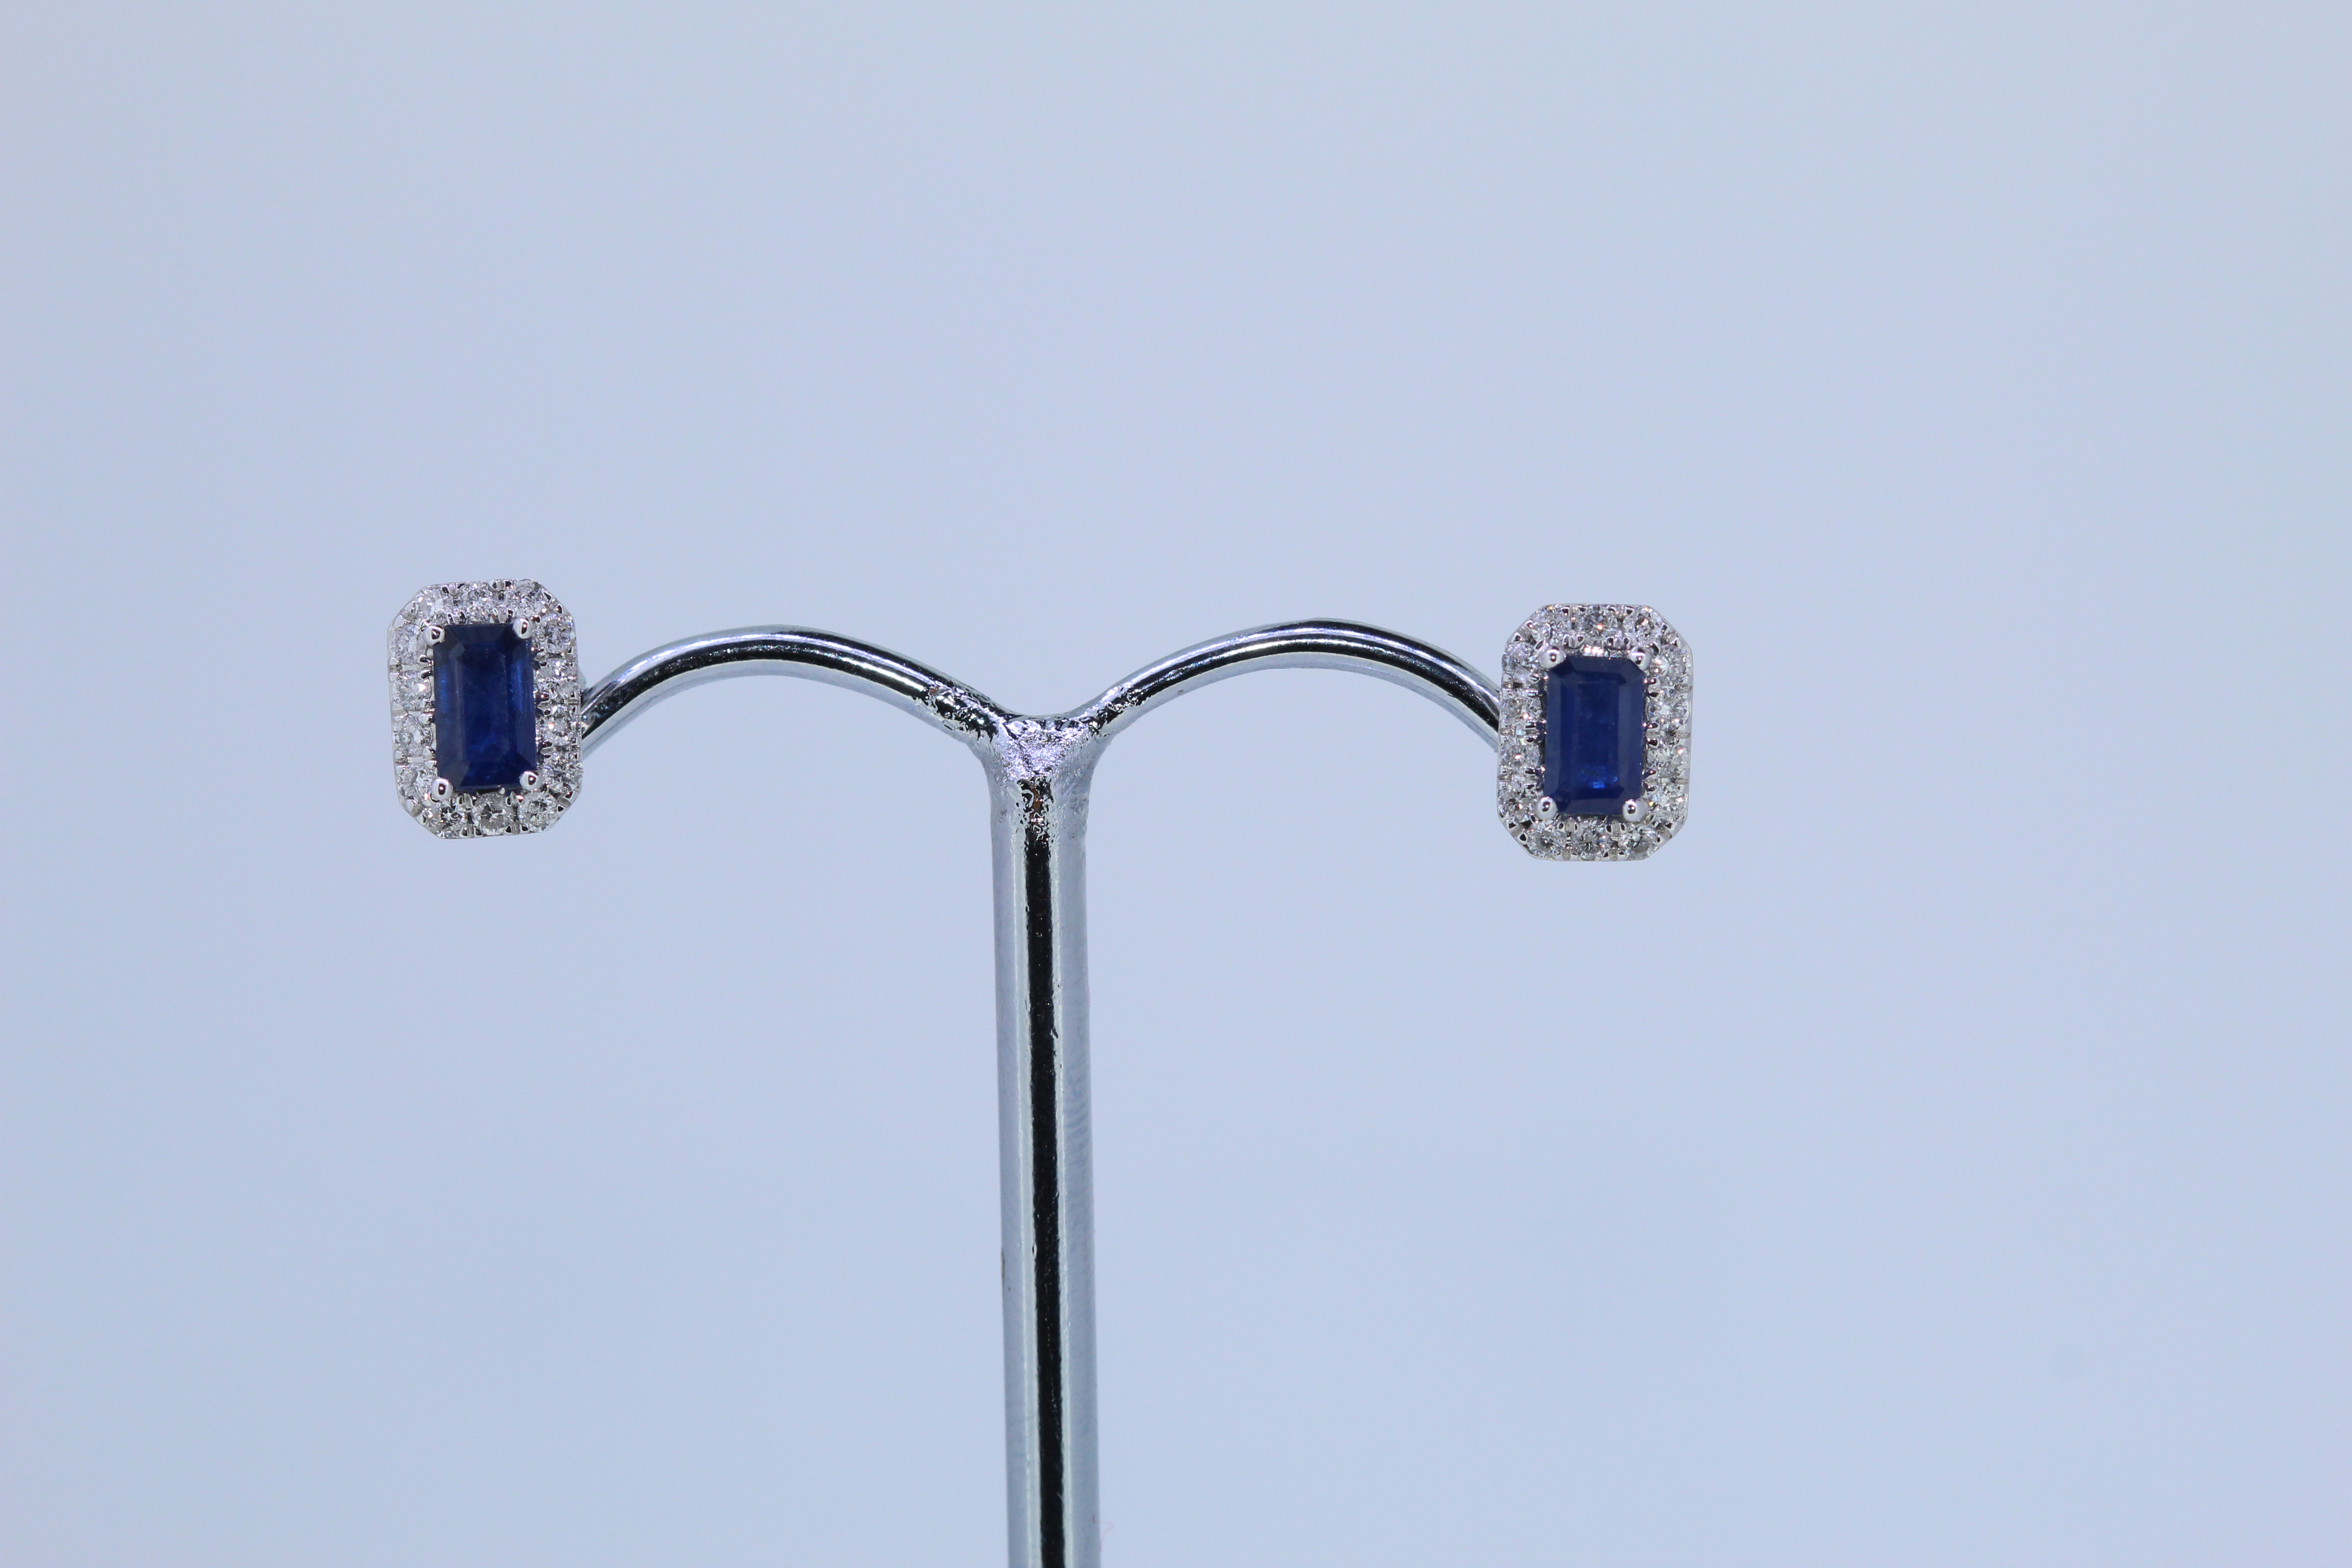 18ct Hallmark White Gold Sapphire And Diamond Stud Earring - Image 3 of 4